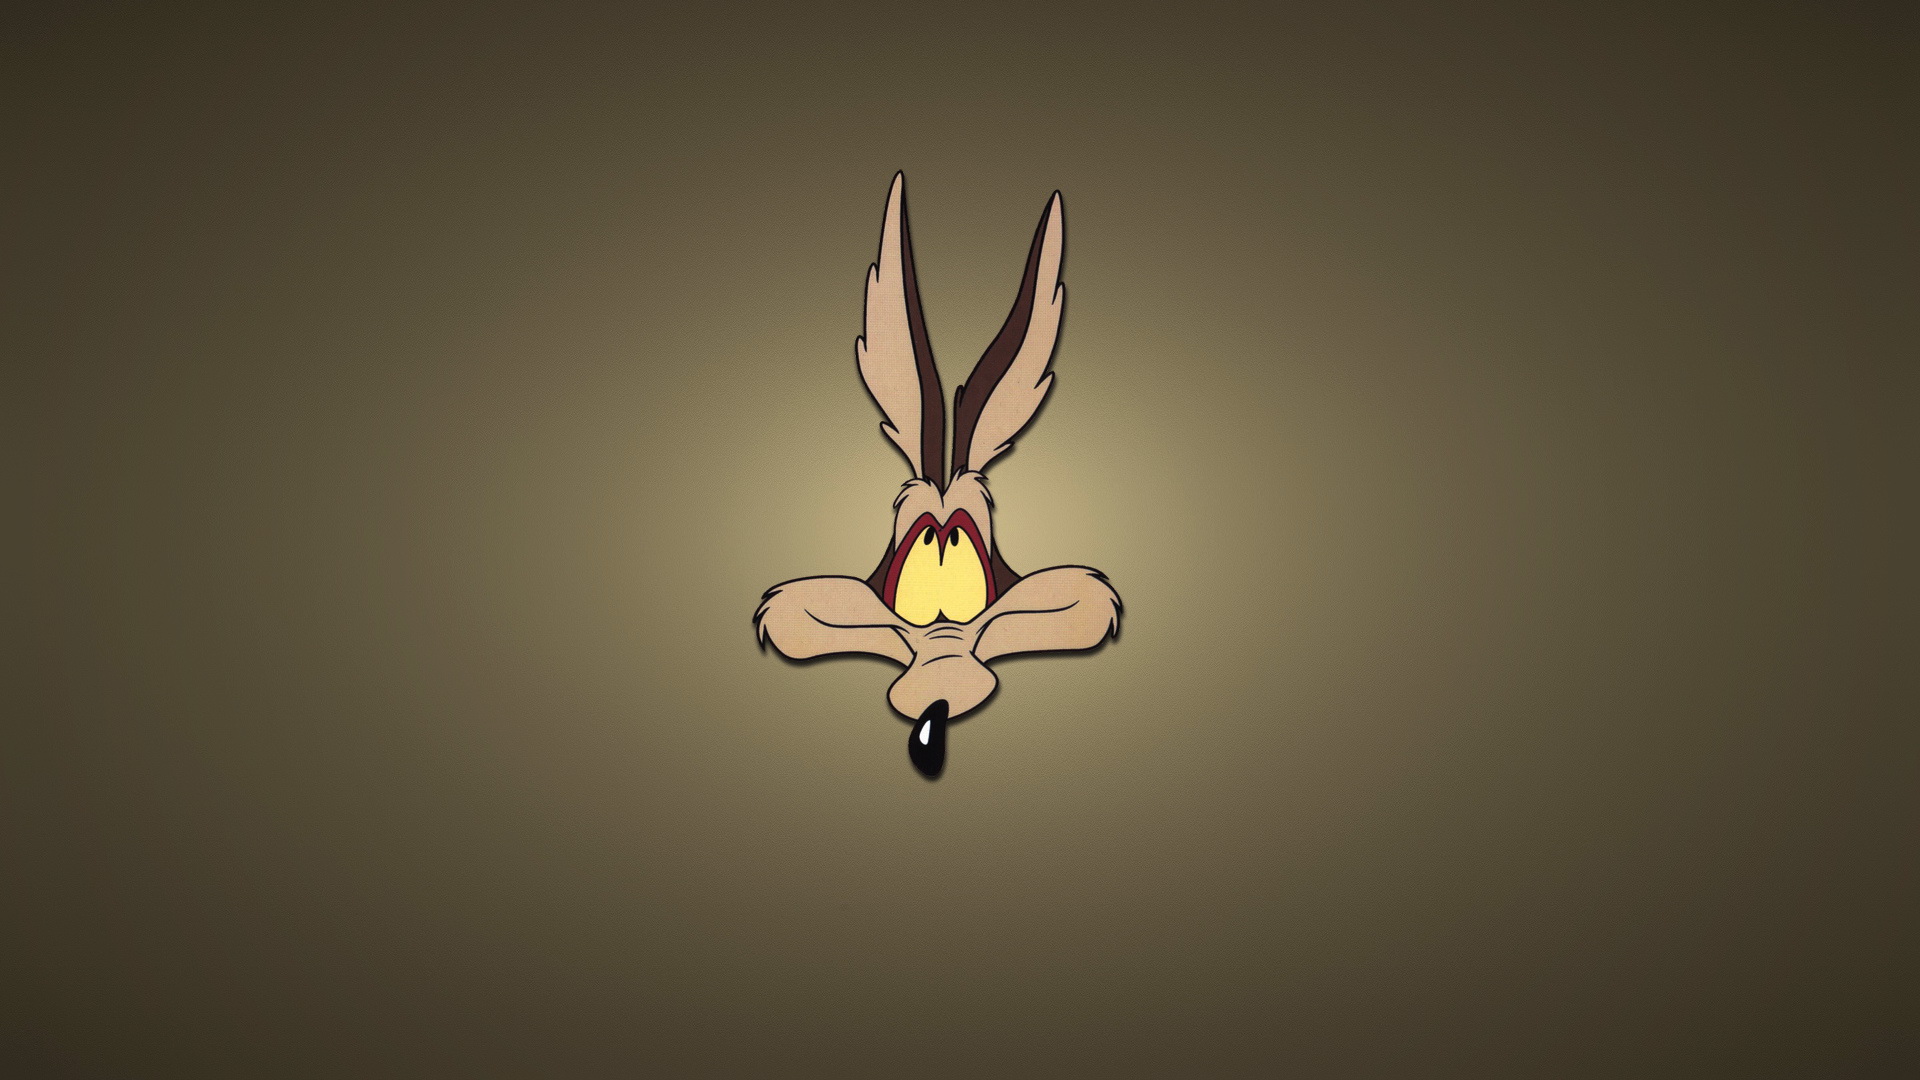 A drawing of a cartoon Bugs Bunny